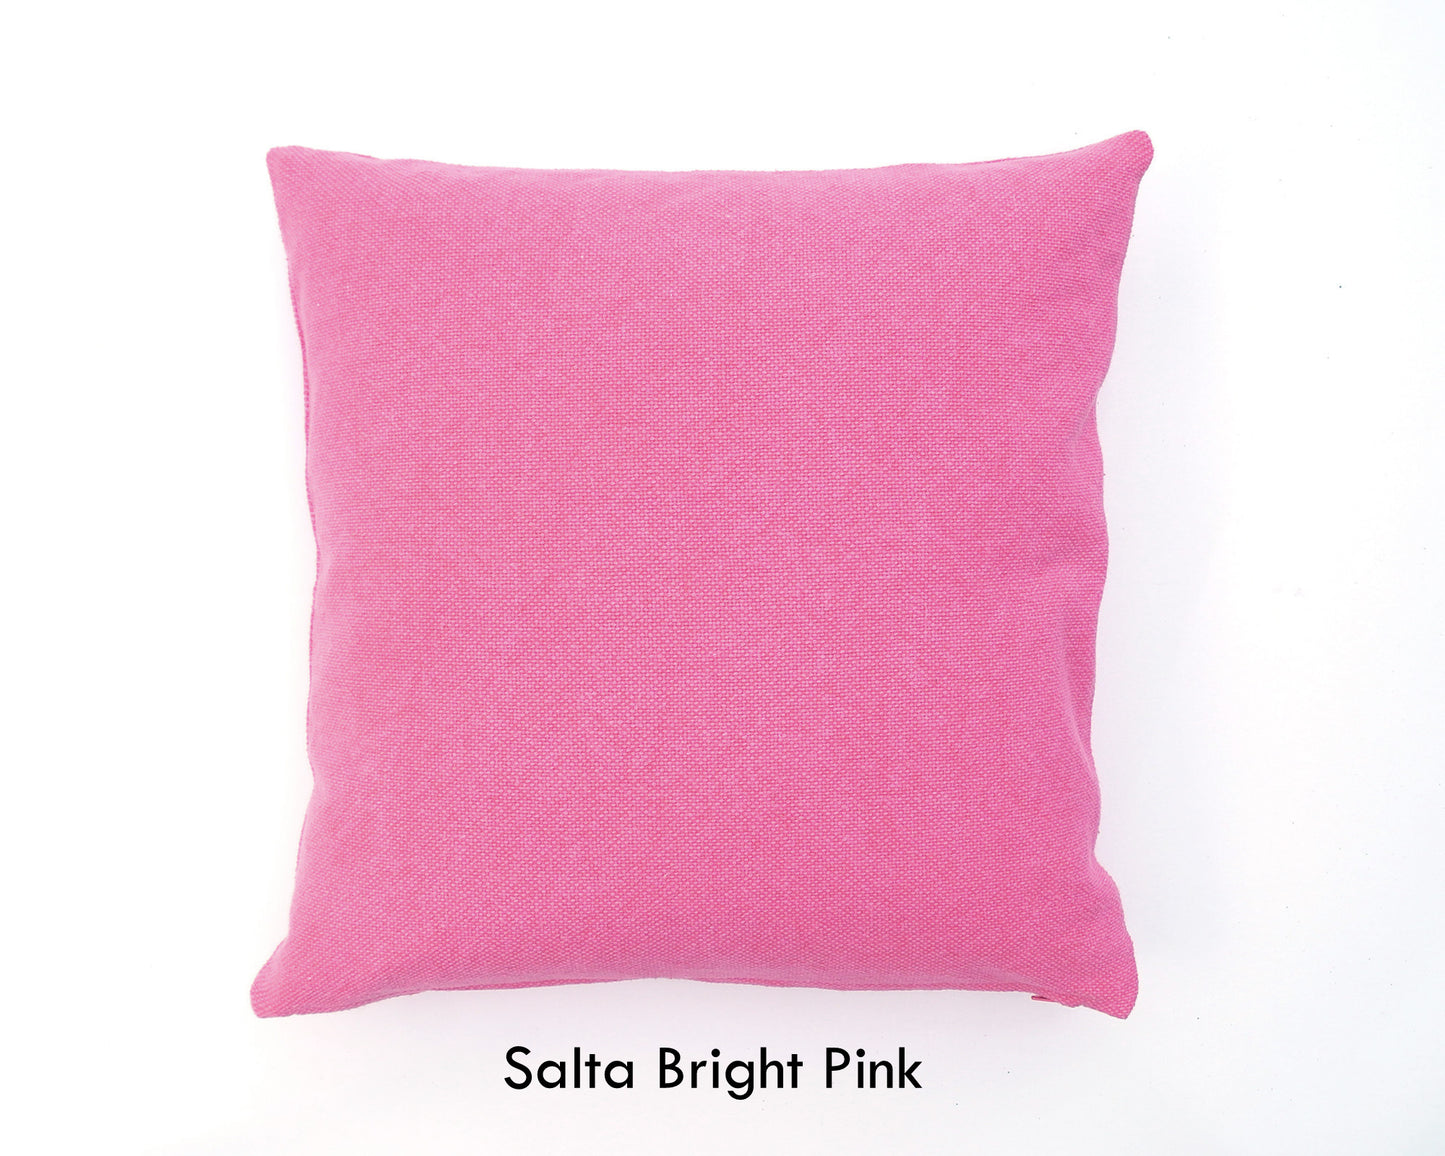 Cotton Stonewashed Cushion - Pink